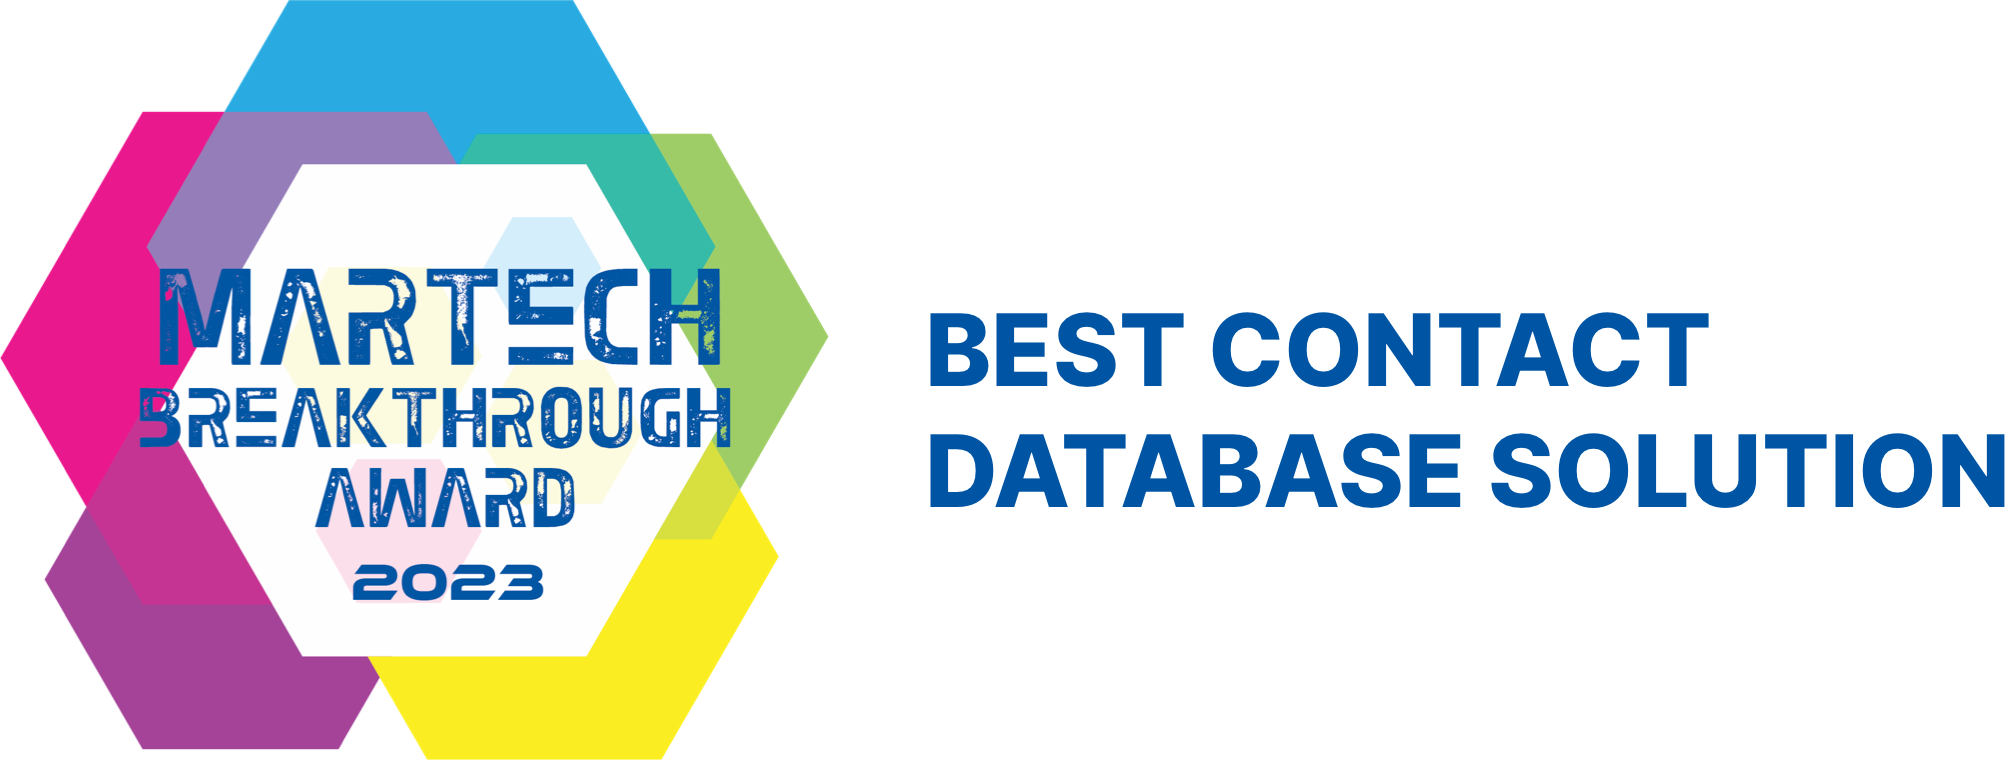 Martech award 2023 best contact database solution endato horz